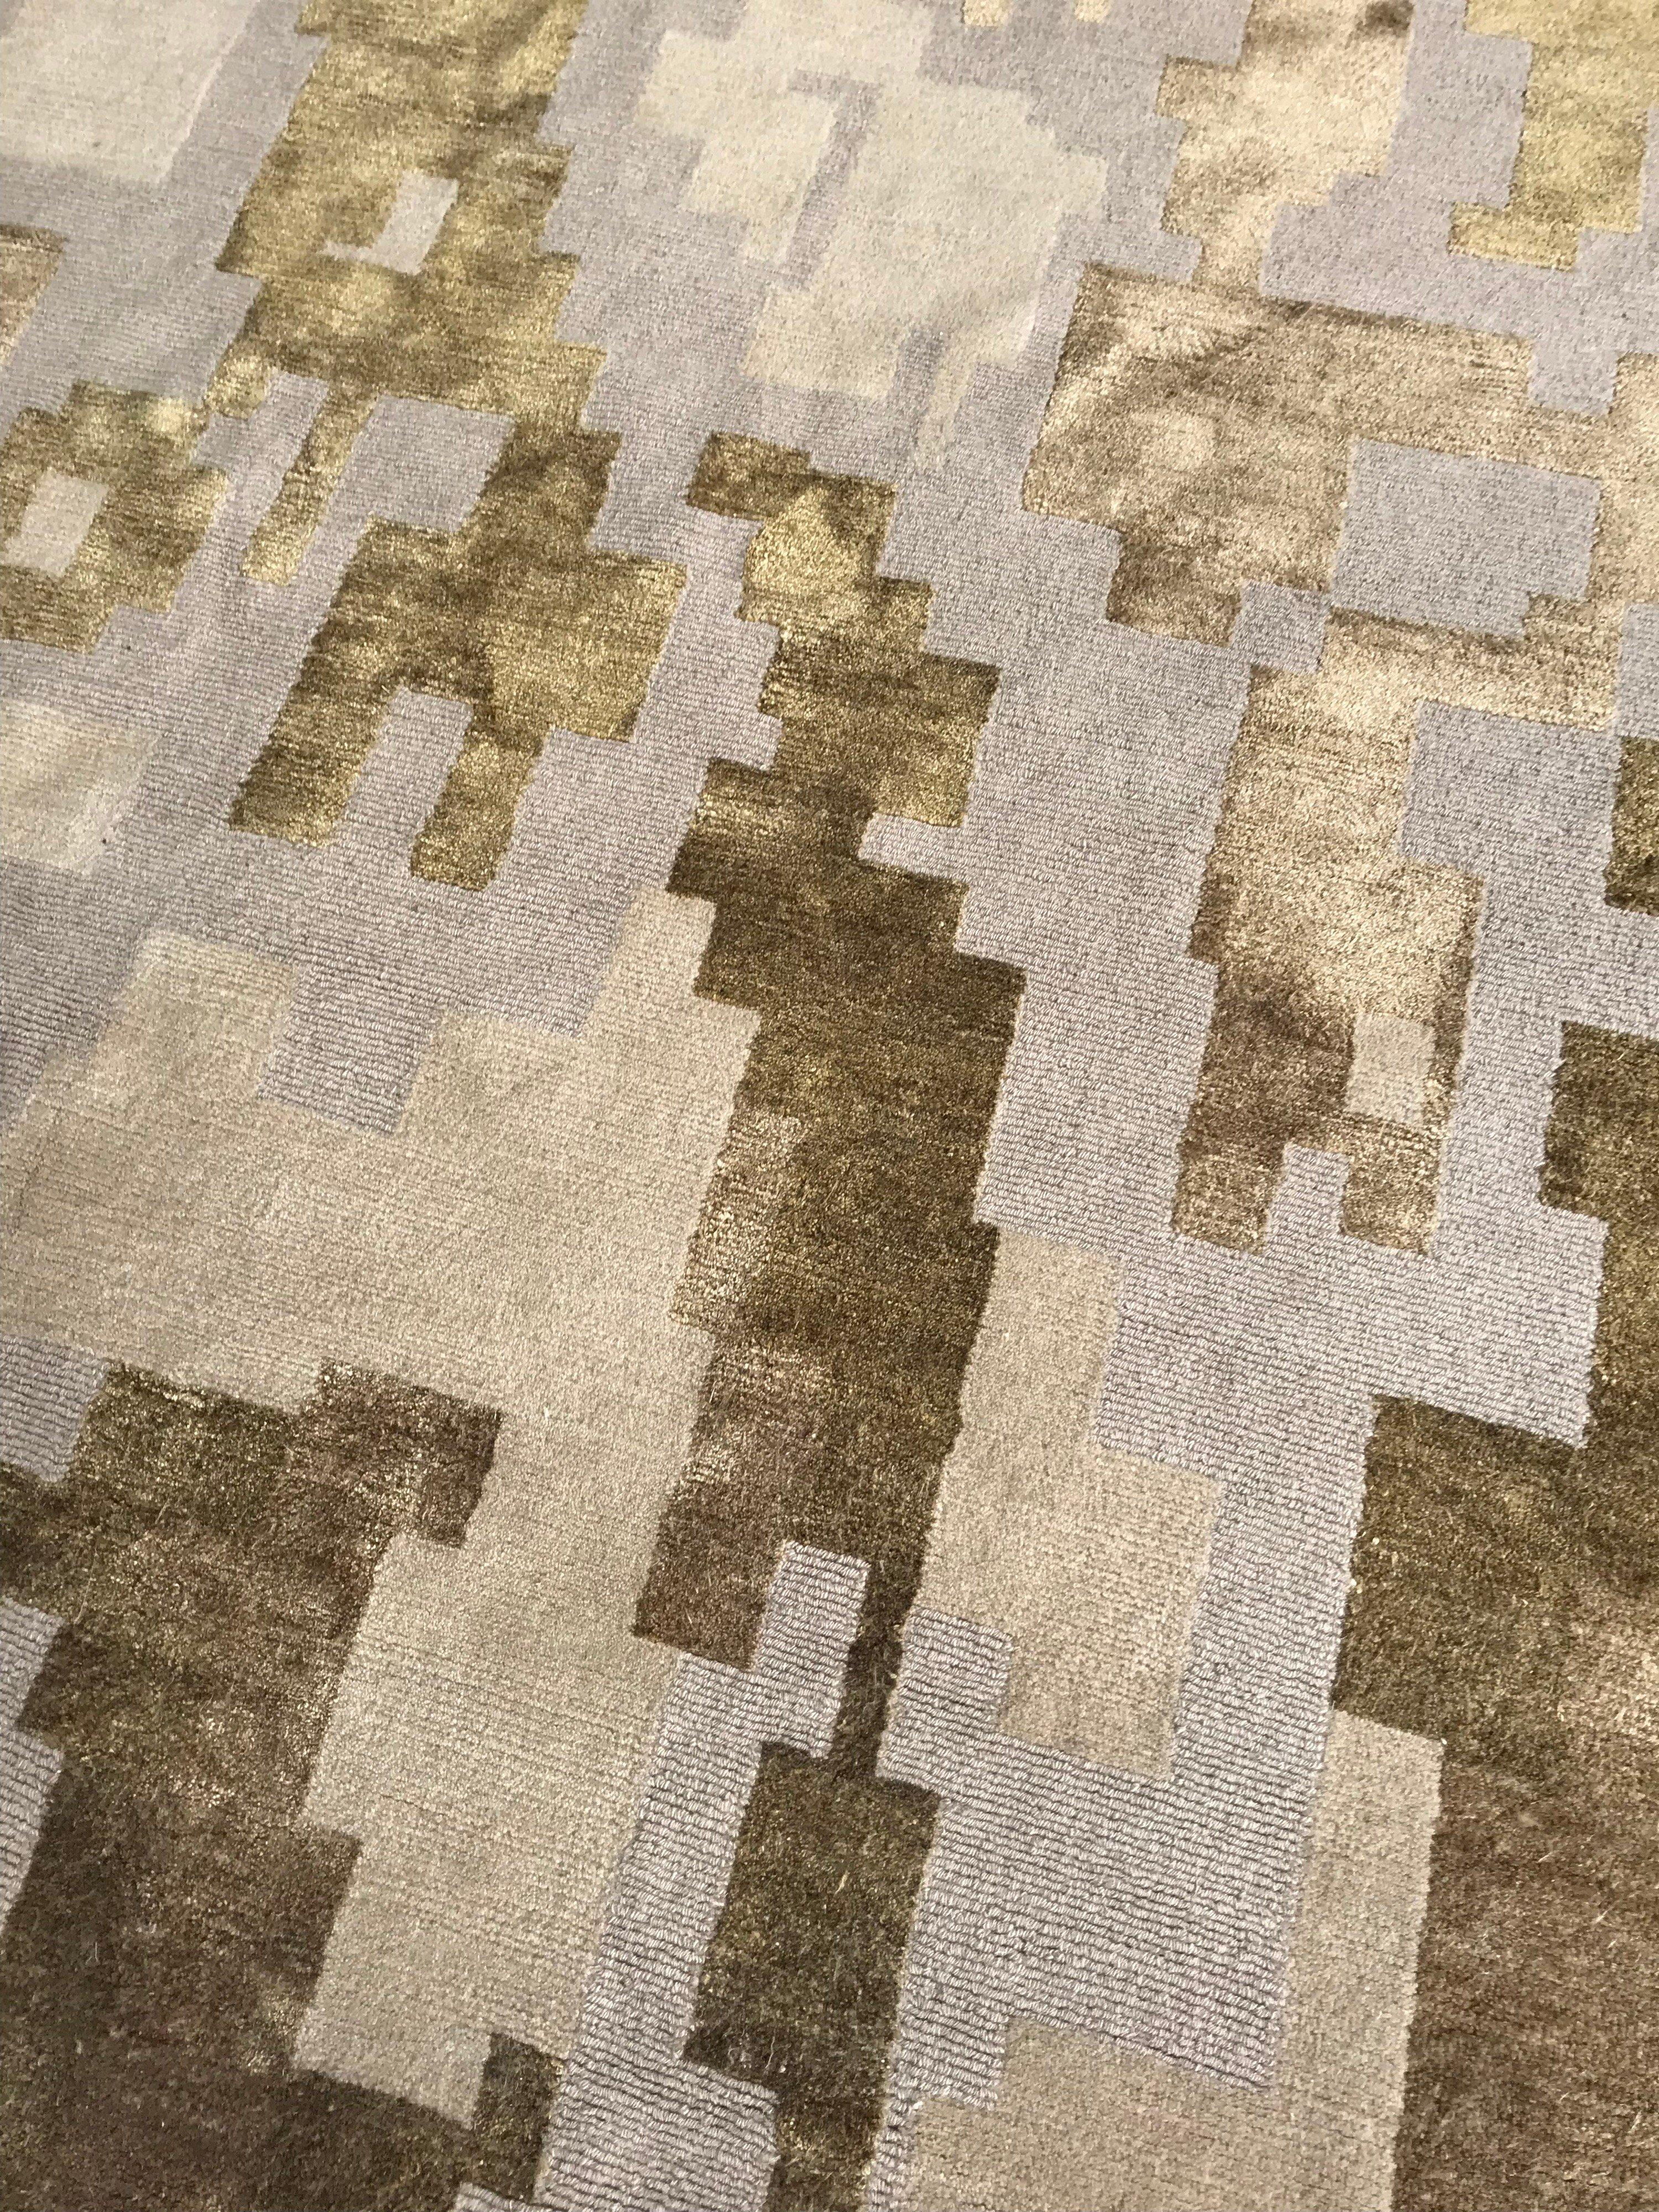 Arthur Dunnam abstract design handmade rug for Doris Leslie Blau
Size: 6'0